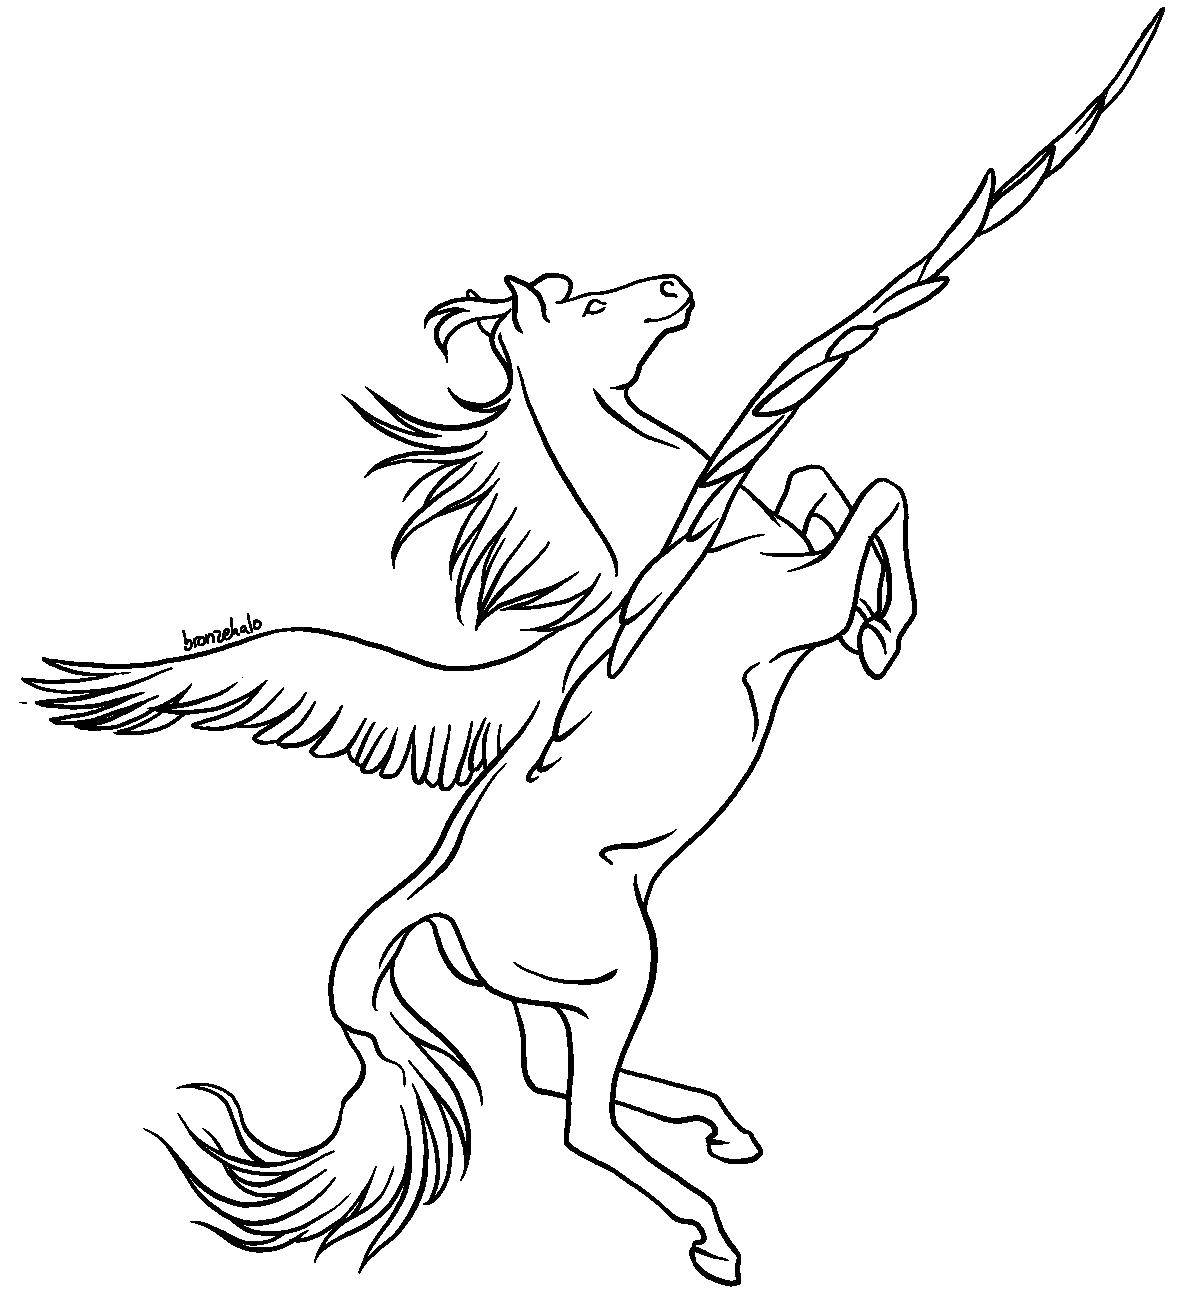 Coloring Pegasus. Category coloring. Tags:  Animals, Pegasus.